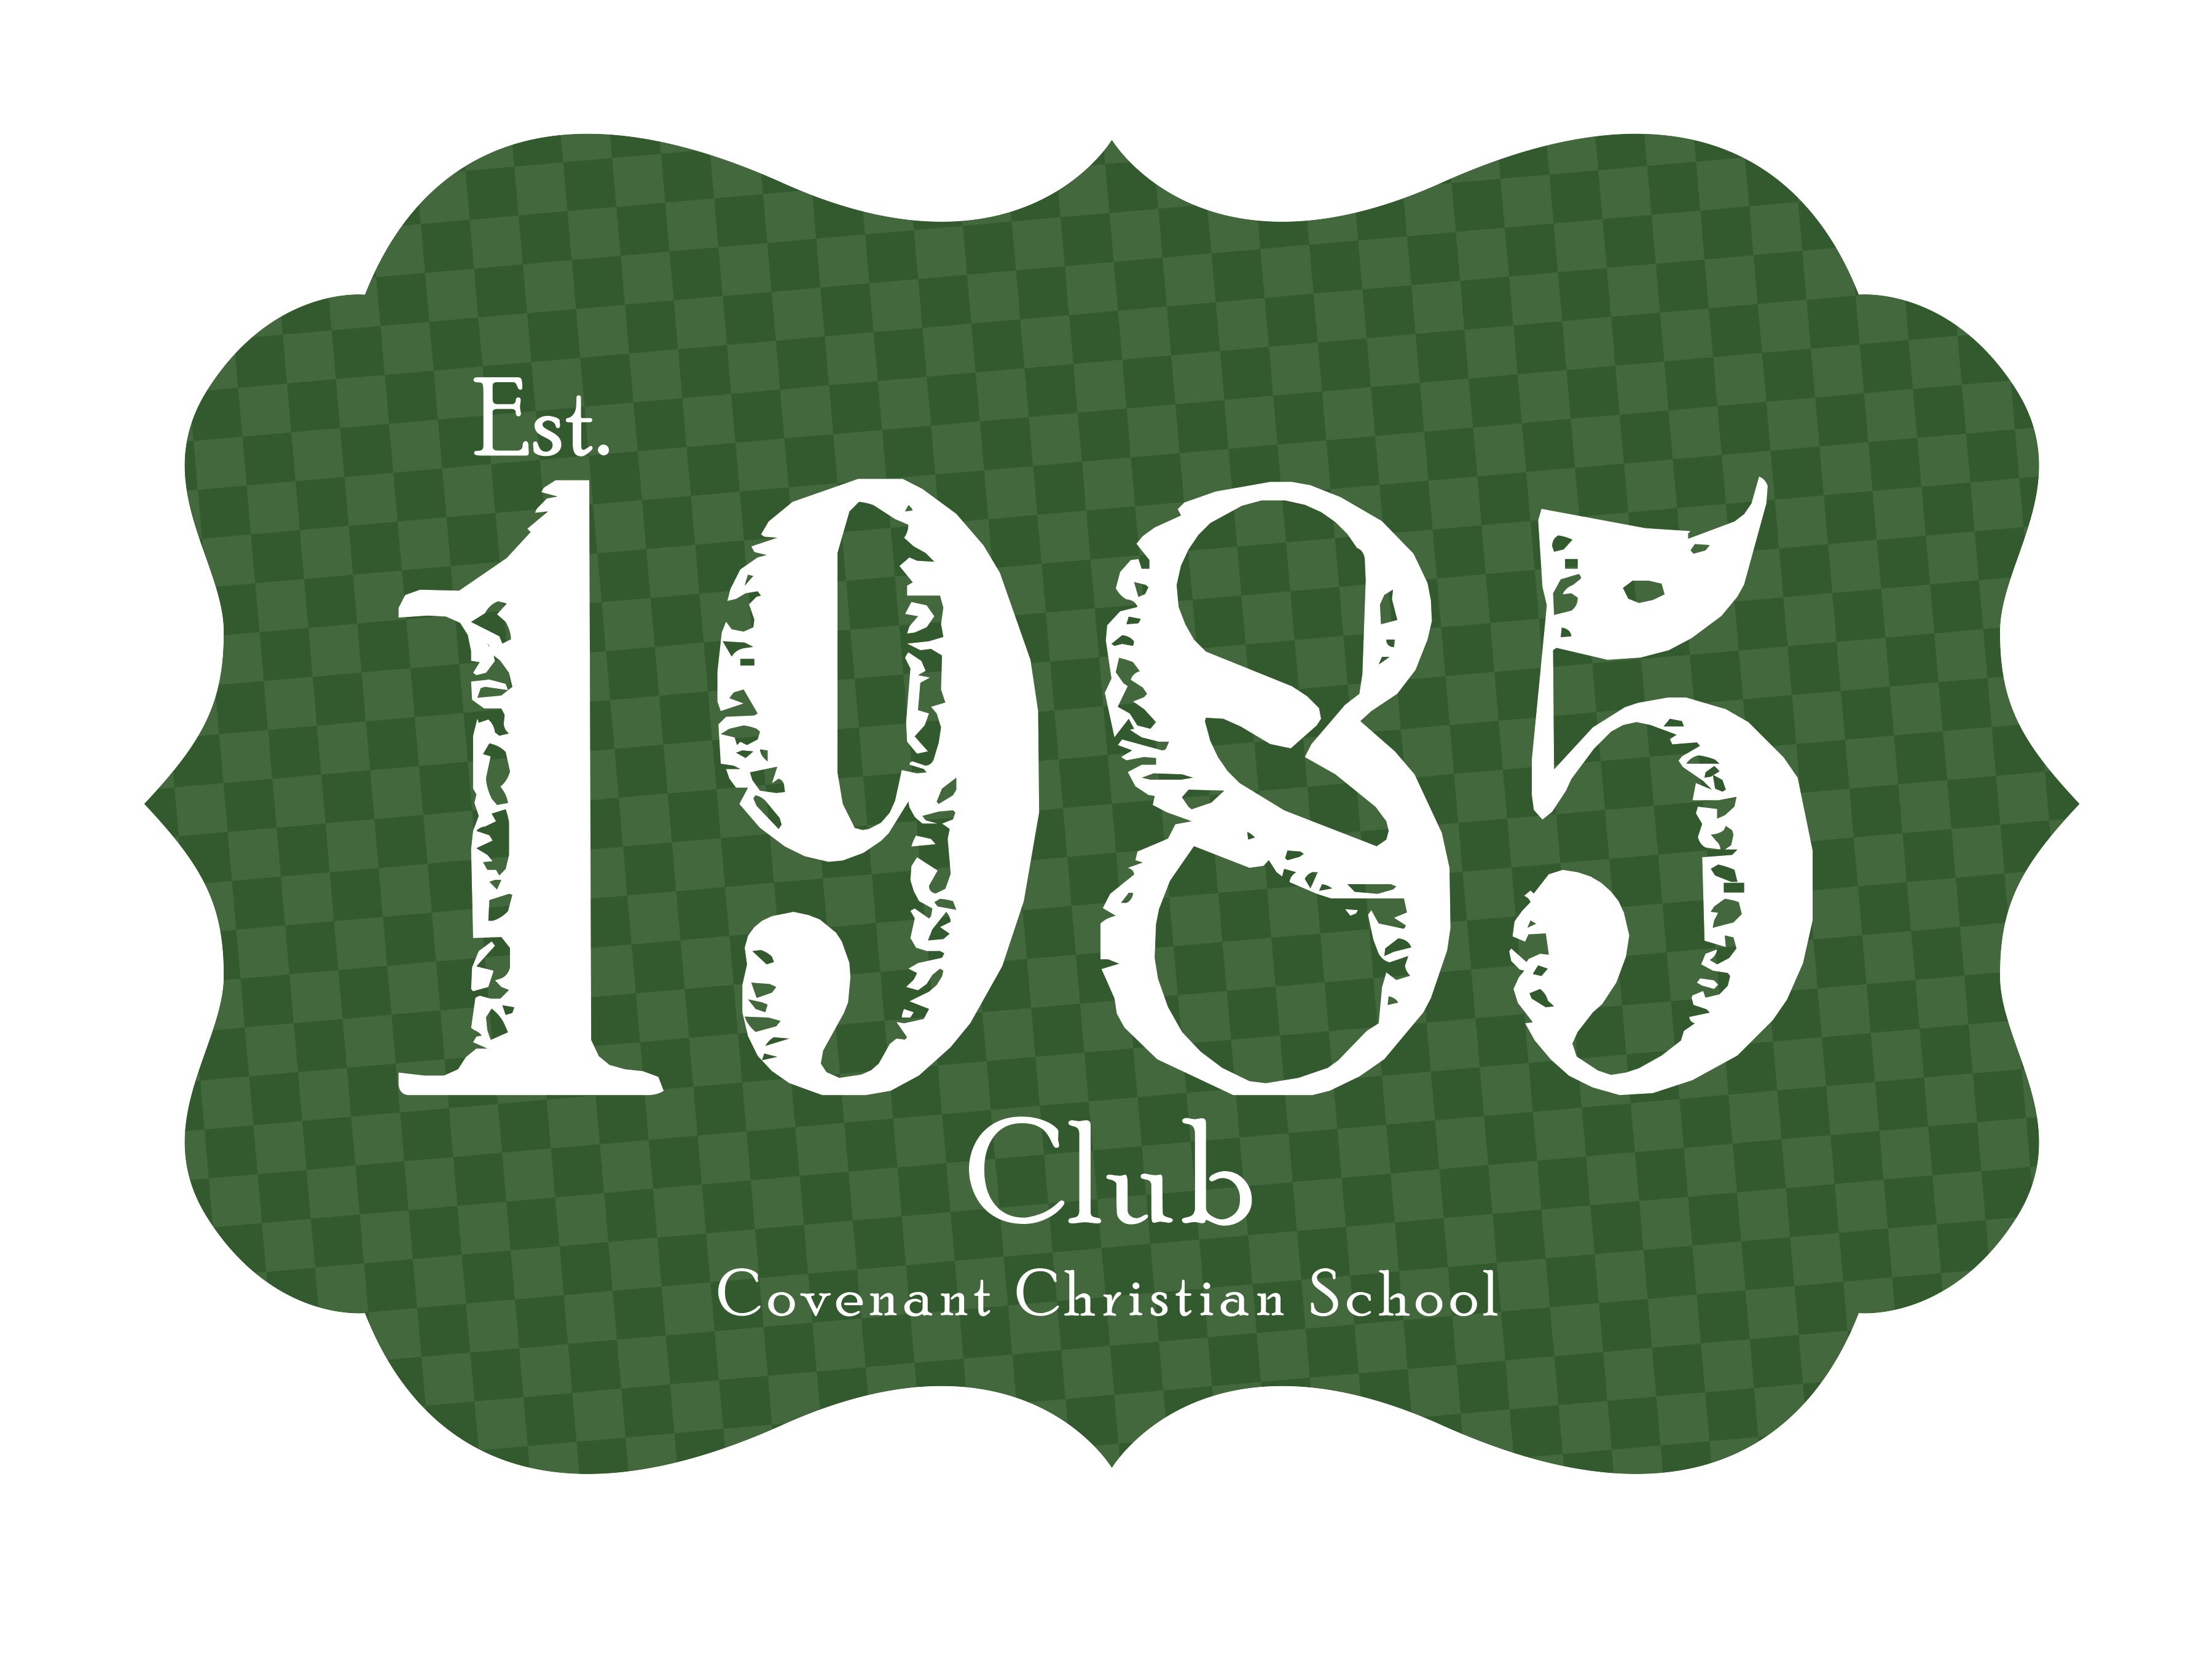 the 1985 Club